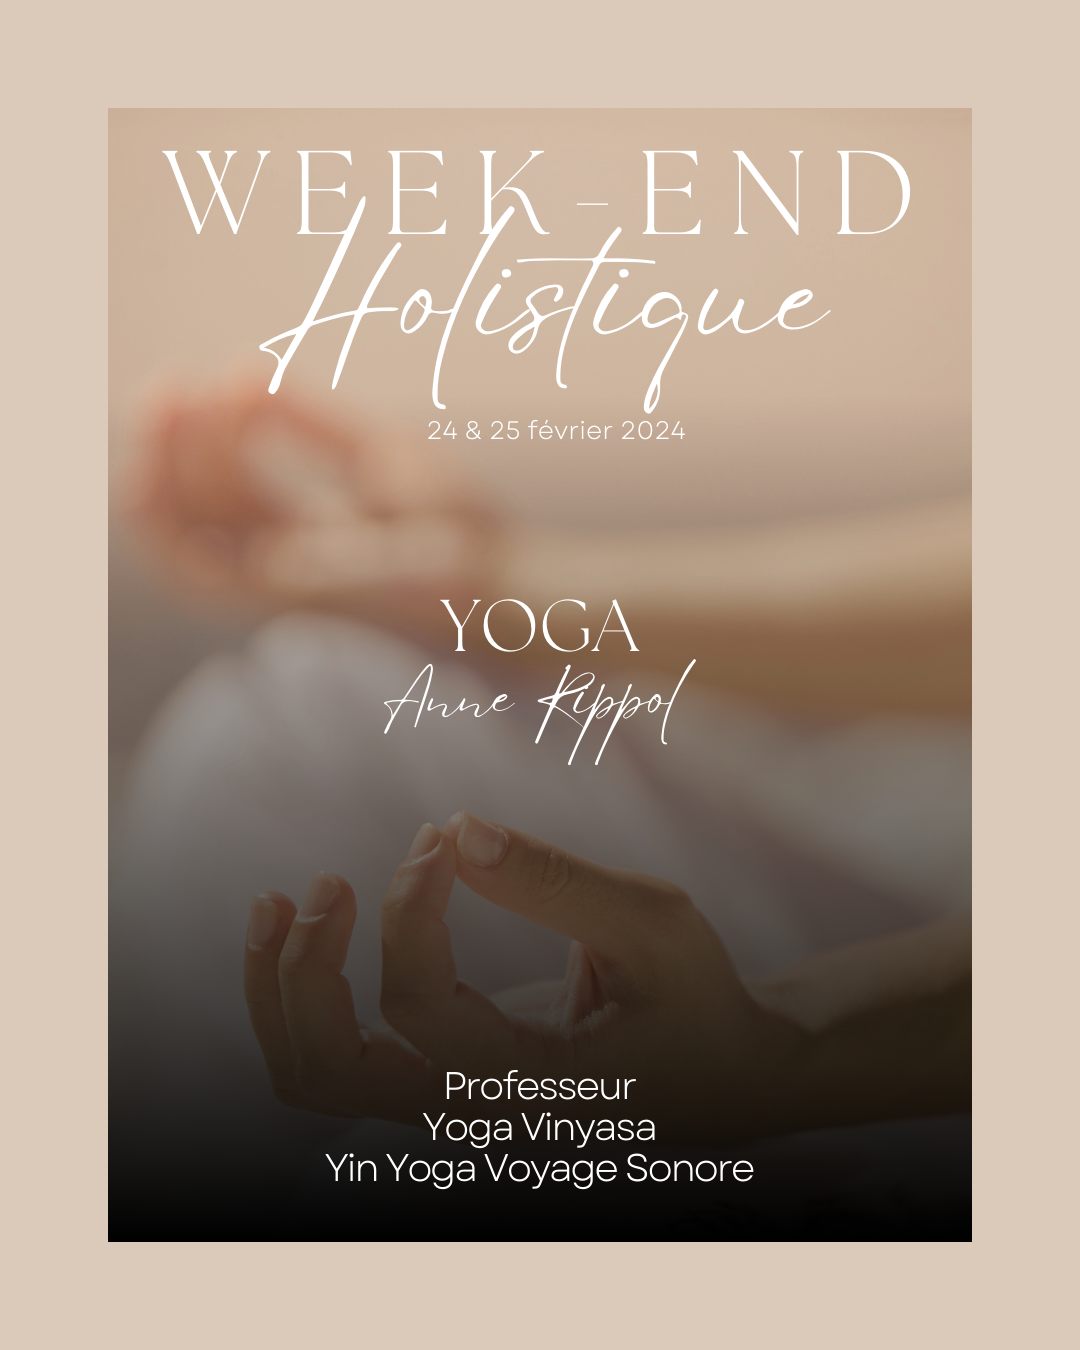 Week-end holistique - février 2024 - Anne Yoga & Chloé (6)